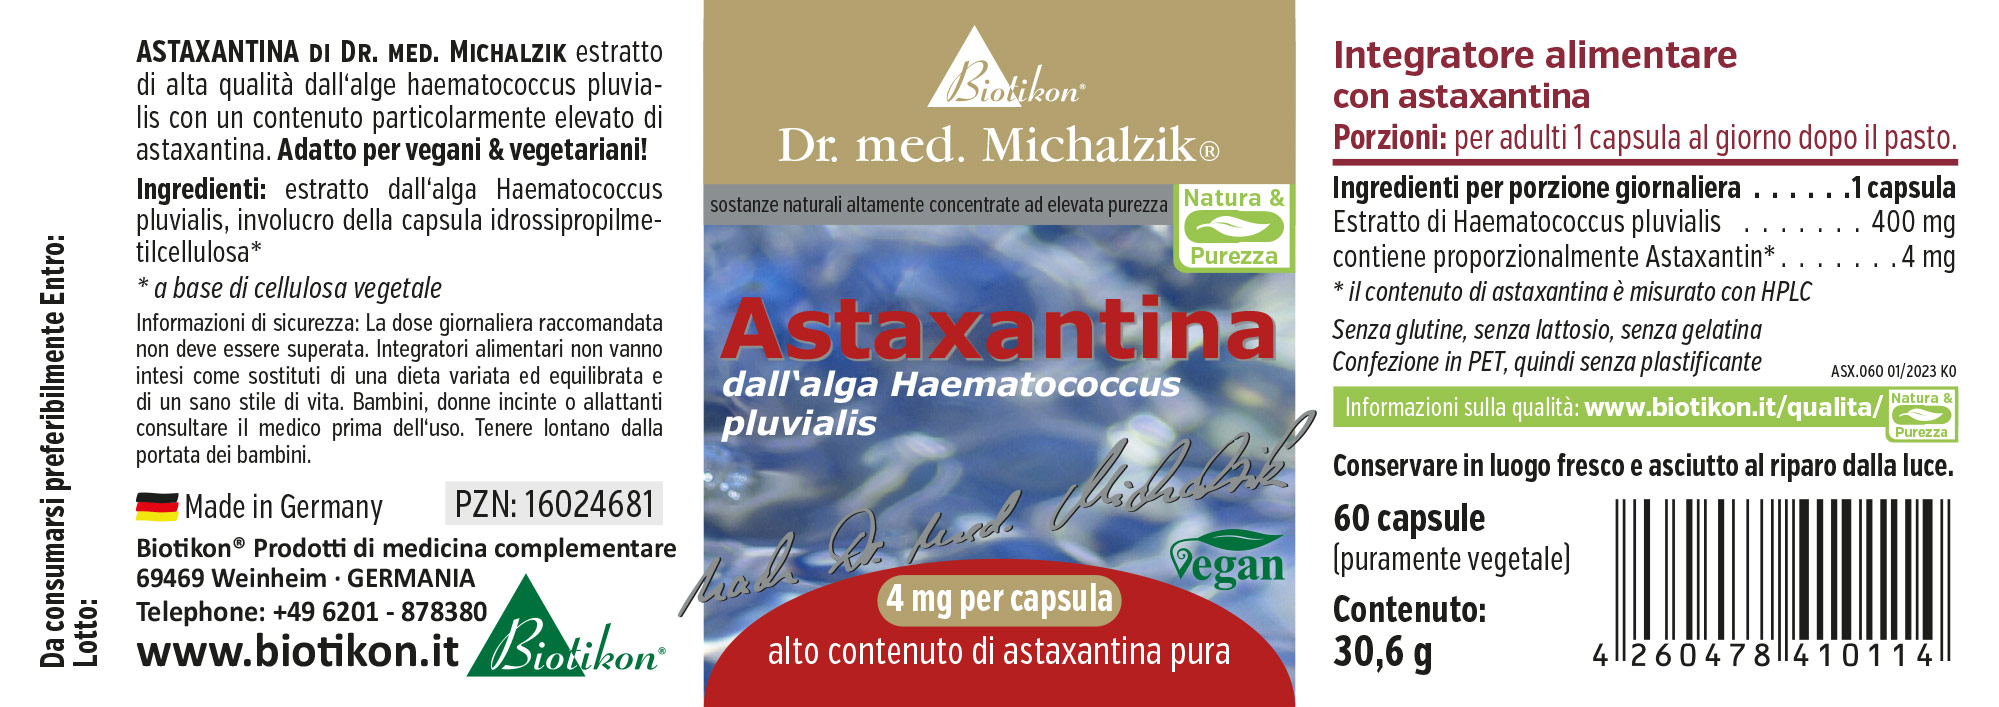 Astaxanthina di Dr. med. Michalzik